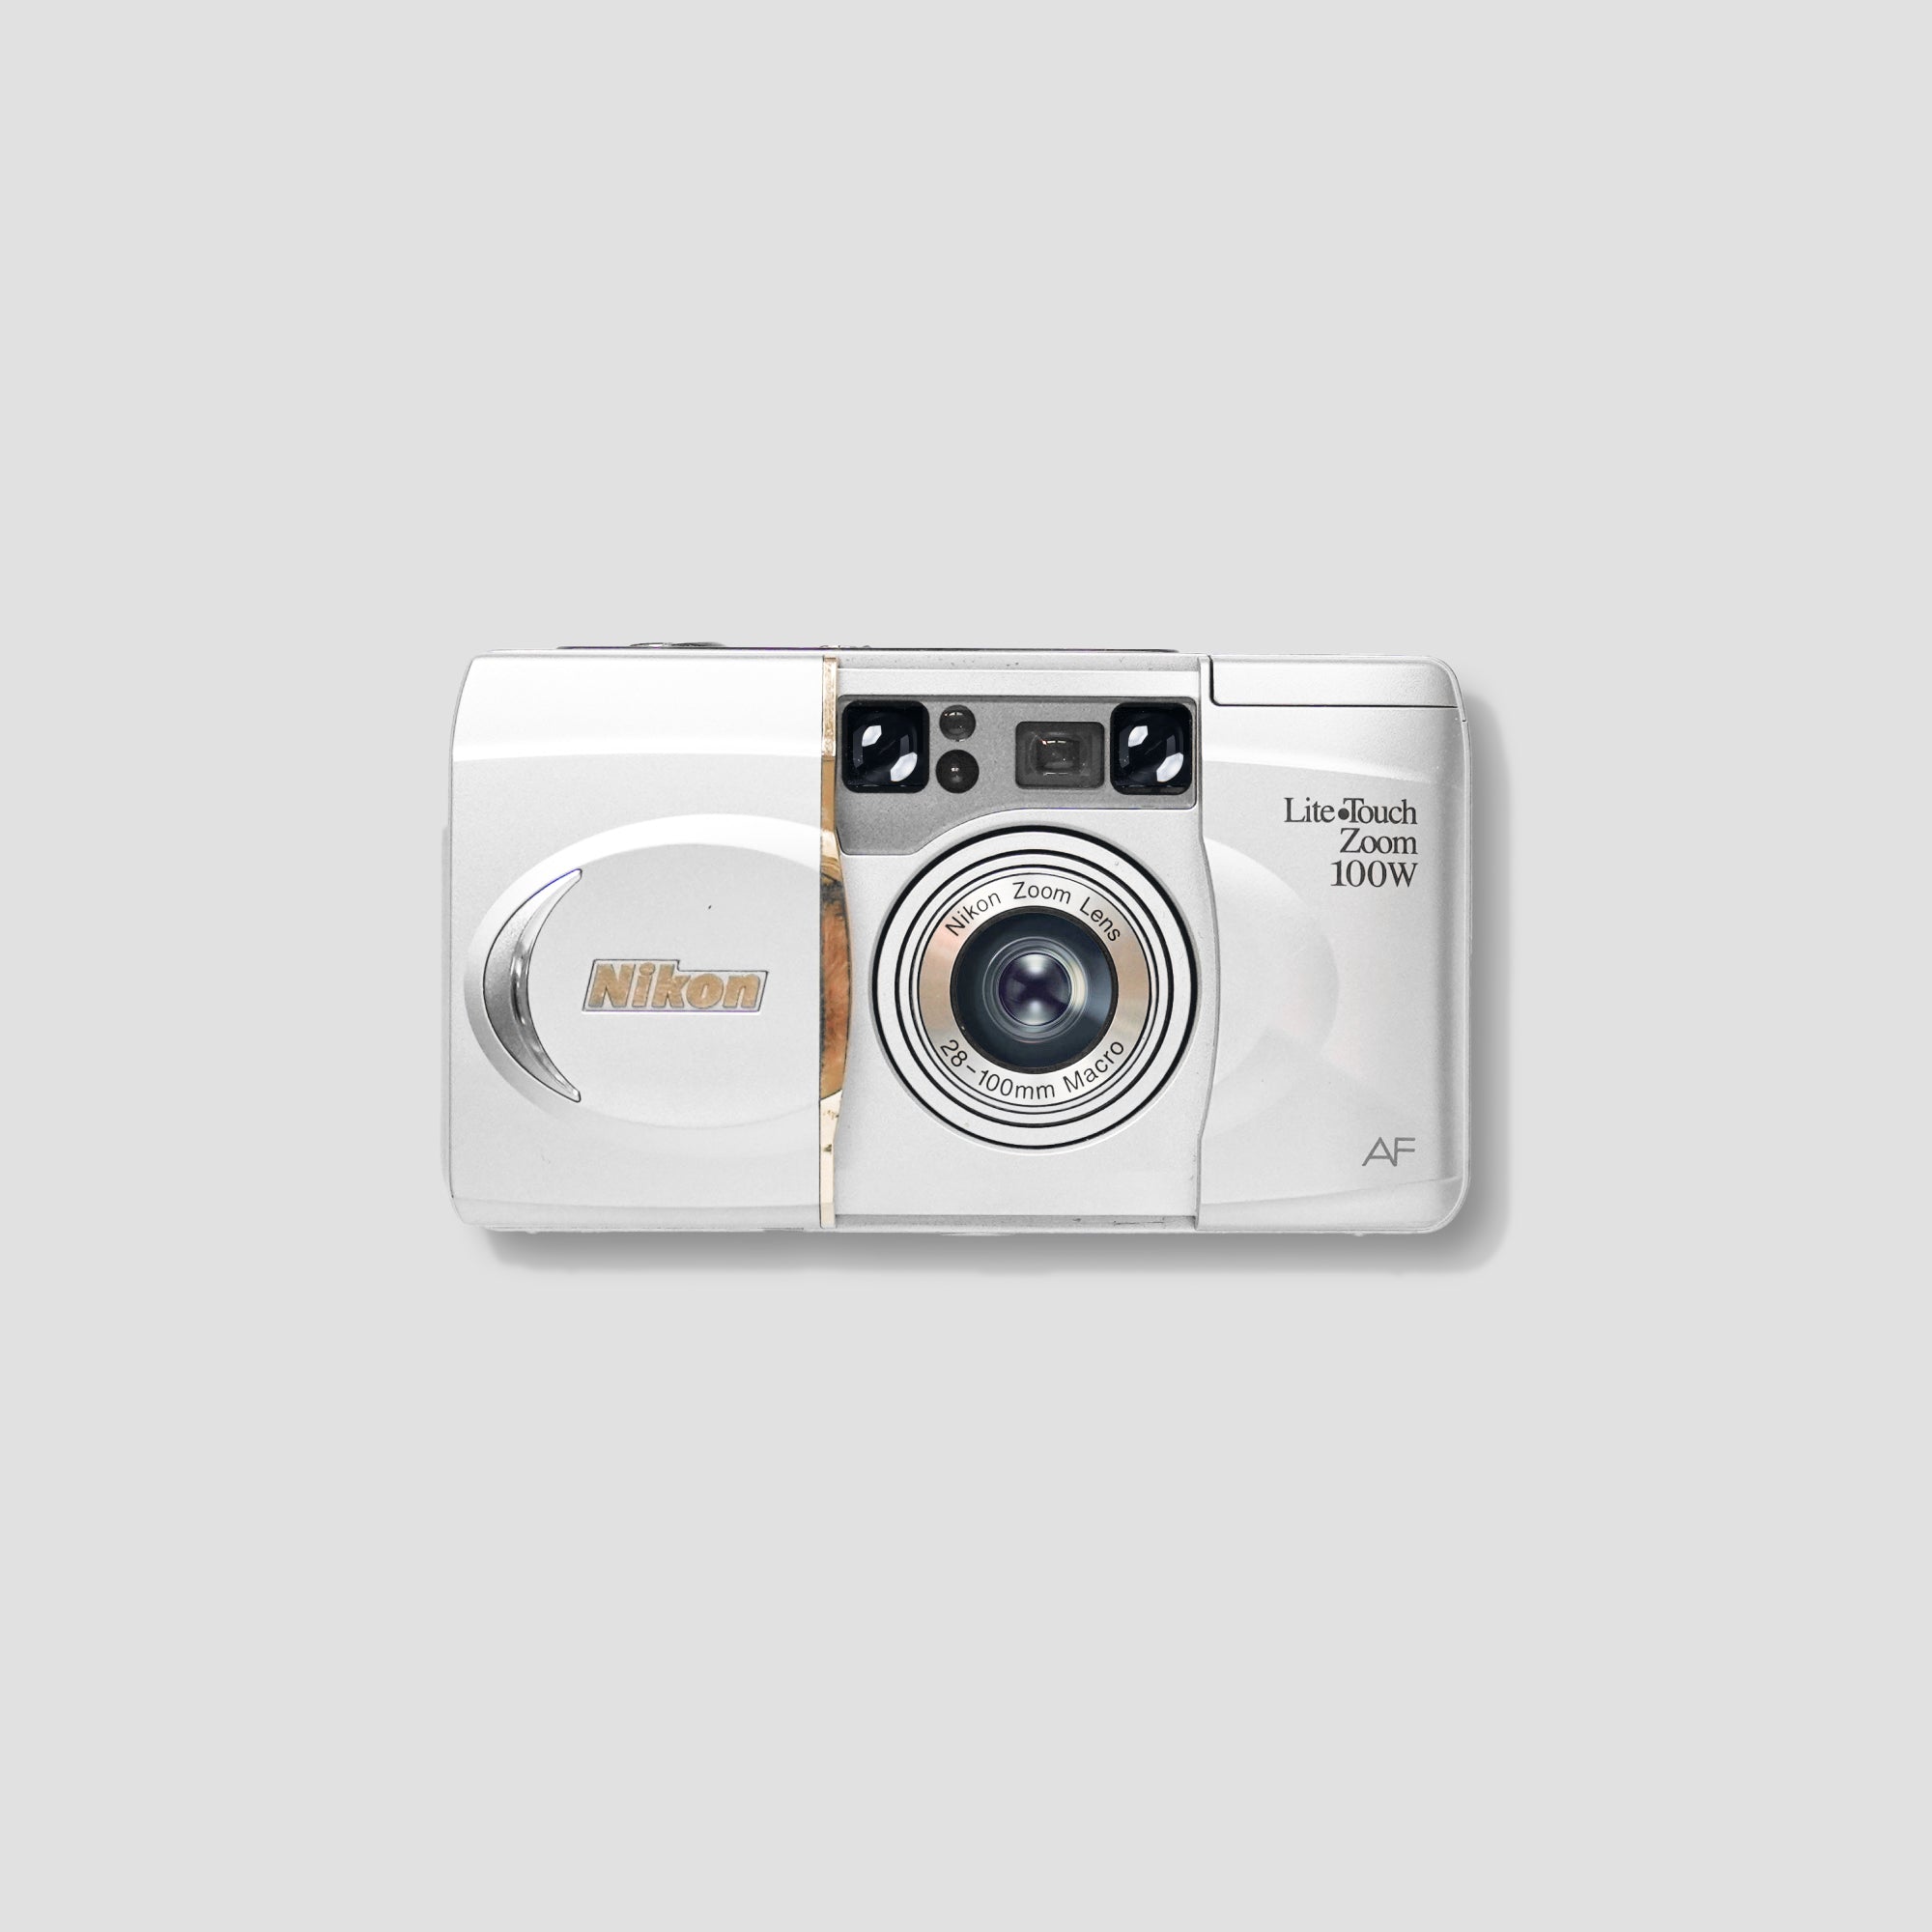 Nikon Lite Touch Zoom 100W